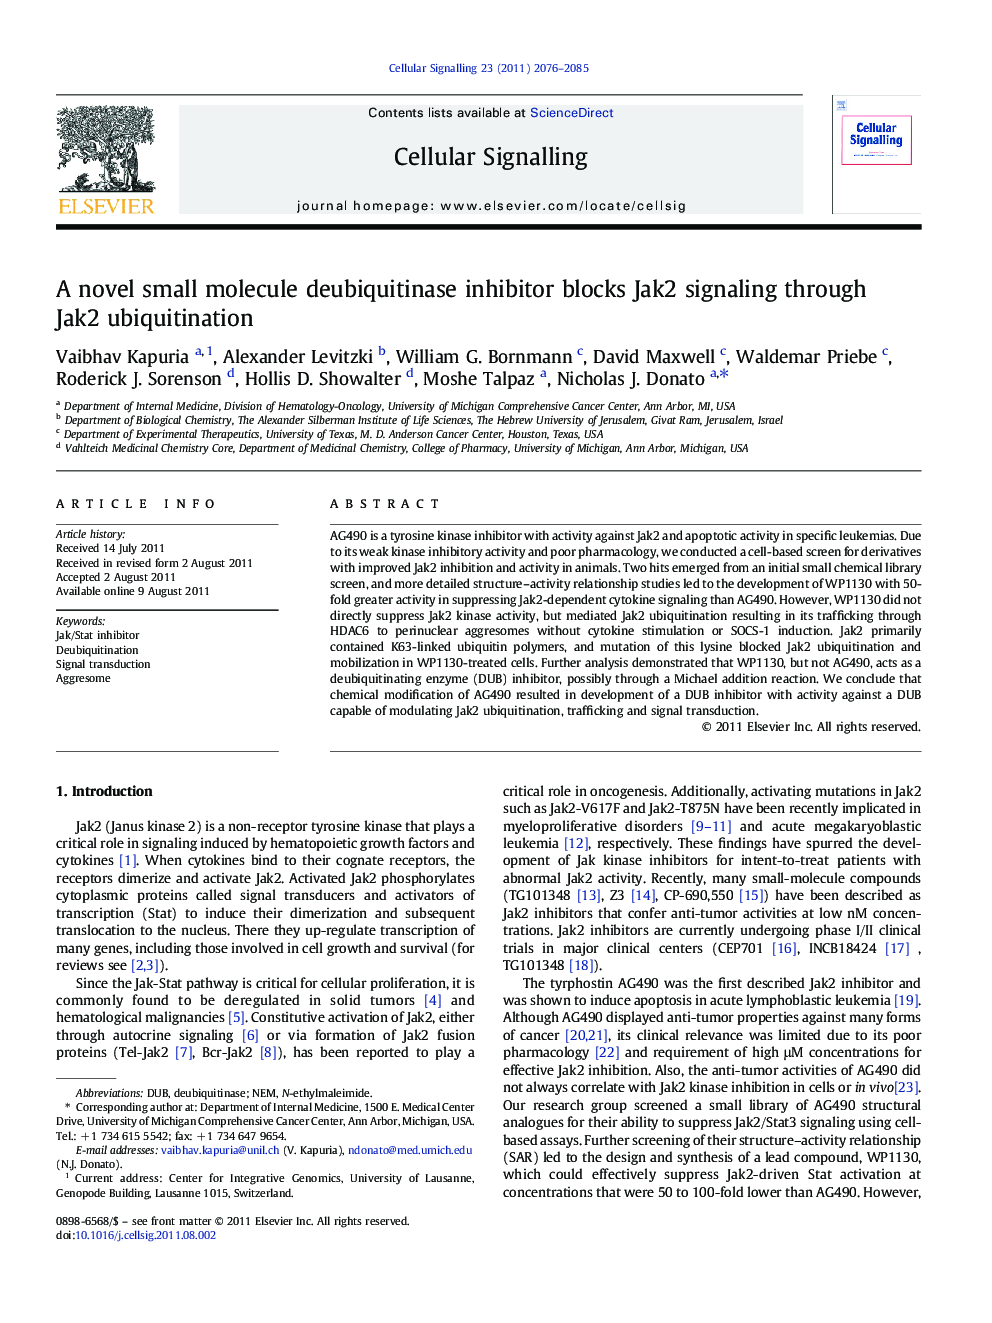 A novel small molecule deubiquitinase inhibitor blocks Jak2 signaling through Jak2 ubiquitination